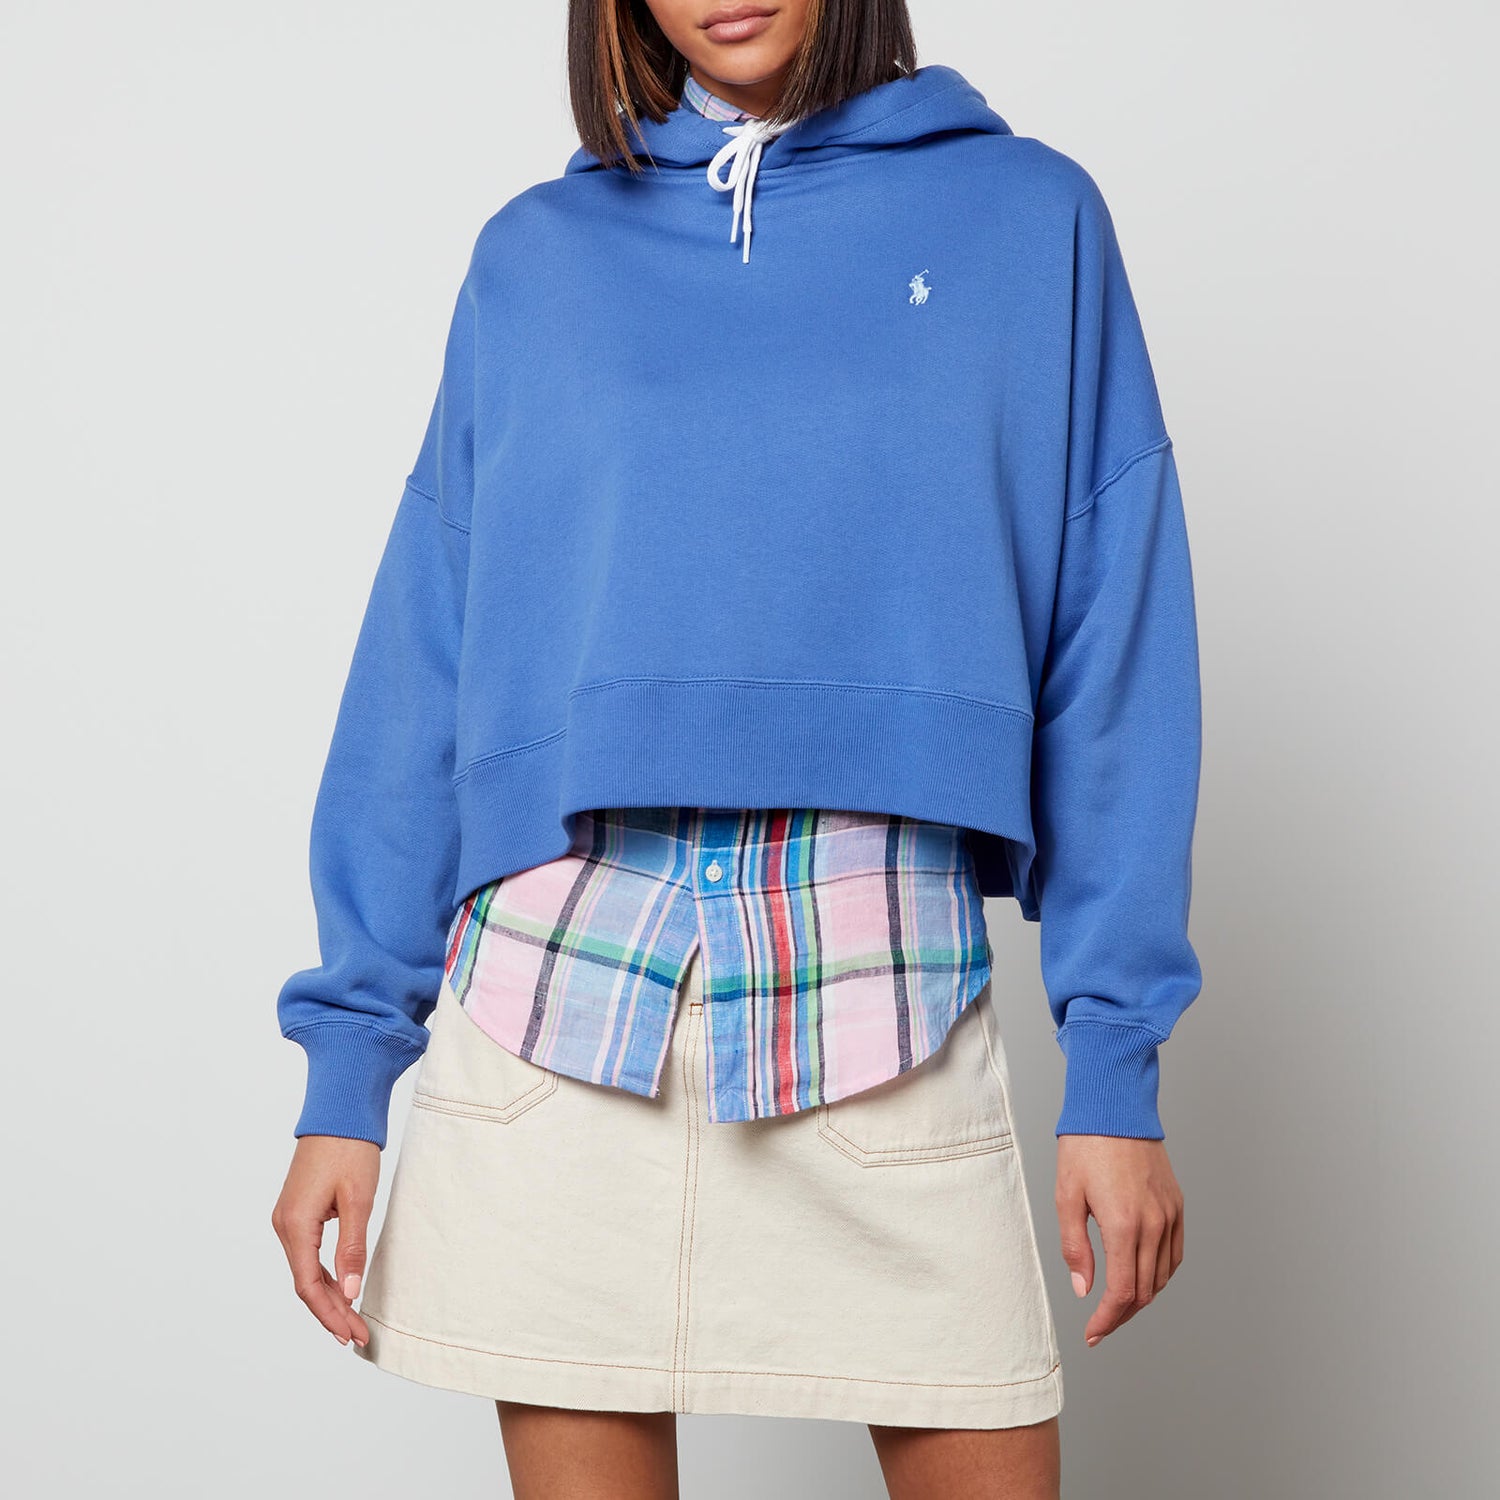 Polo Ralph Lauren Women's Cropped Hooded Sweatshirt - Liberty - S